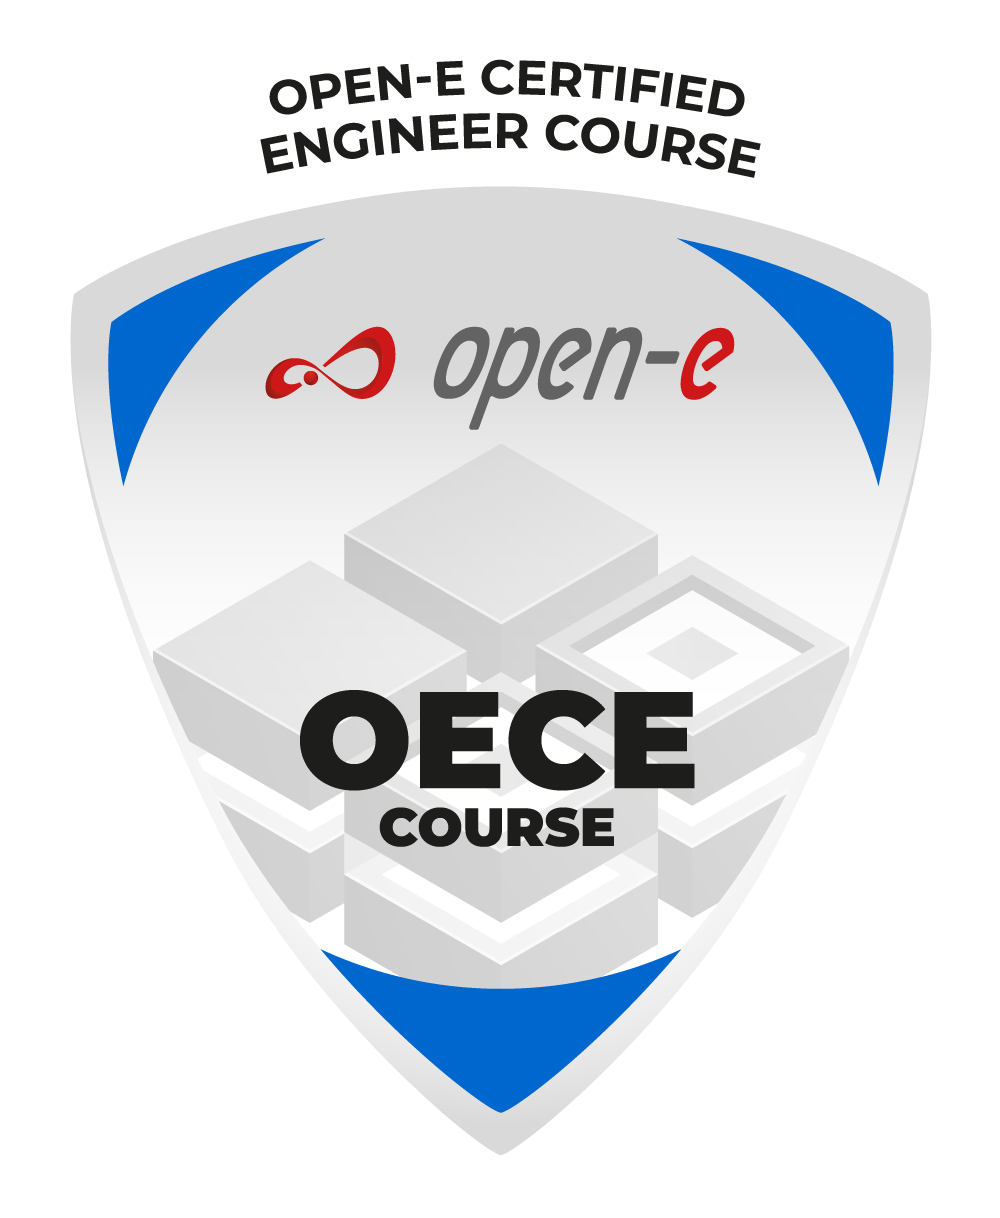 Open-E Certified Engineer Course OECE badge